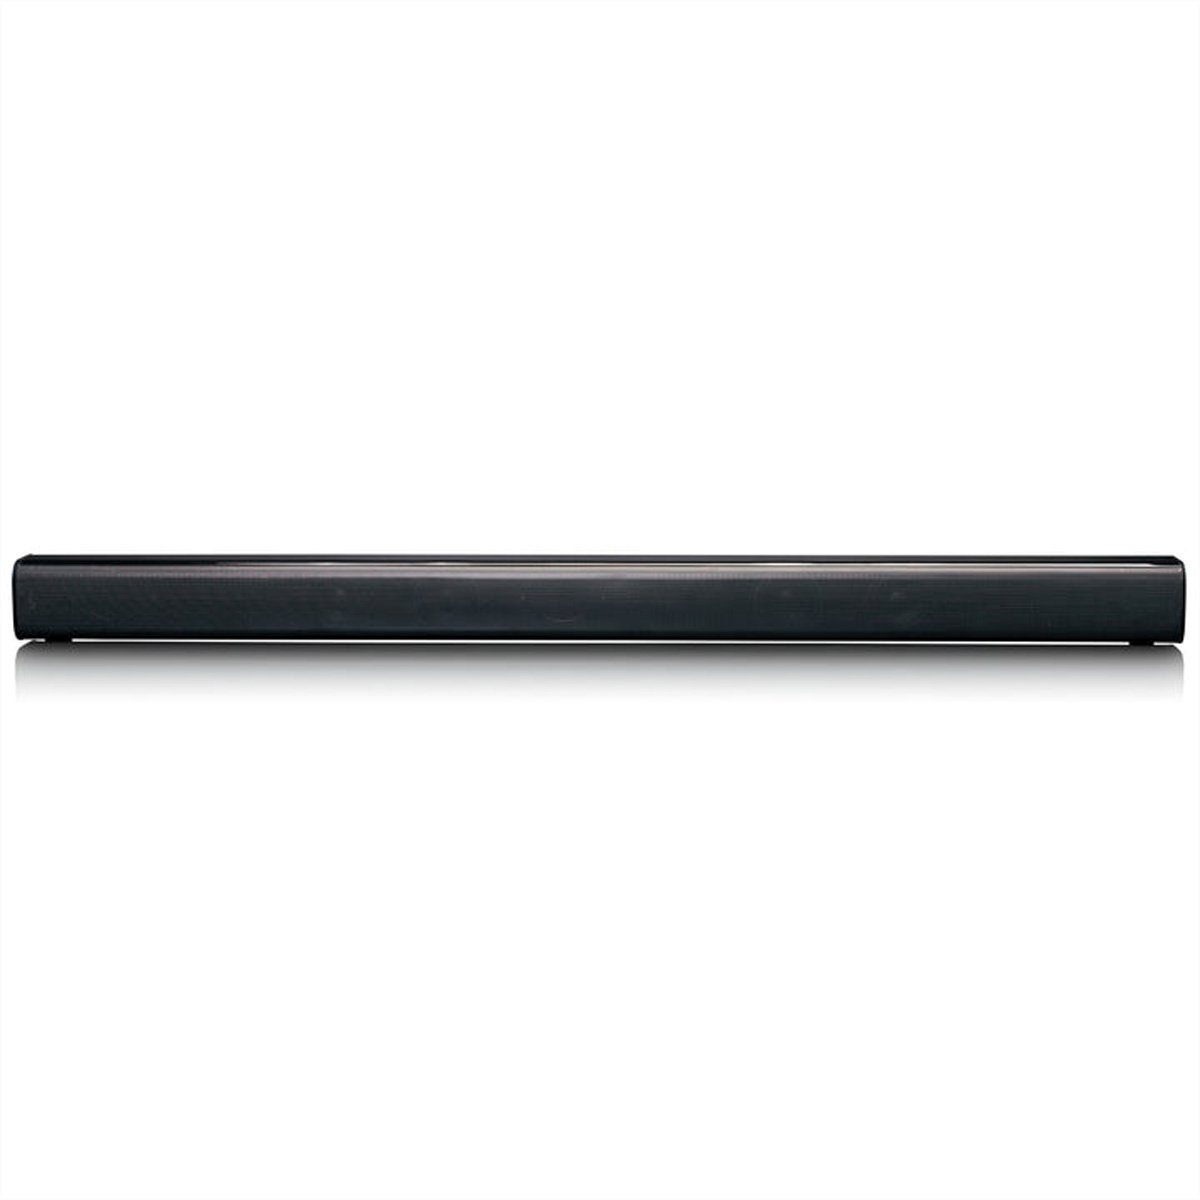 Lenco Soundbar SB-040BK schwarz PC-Lautsprecher (40w, HDMI, BT)